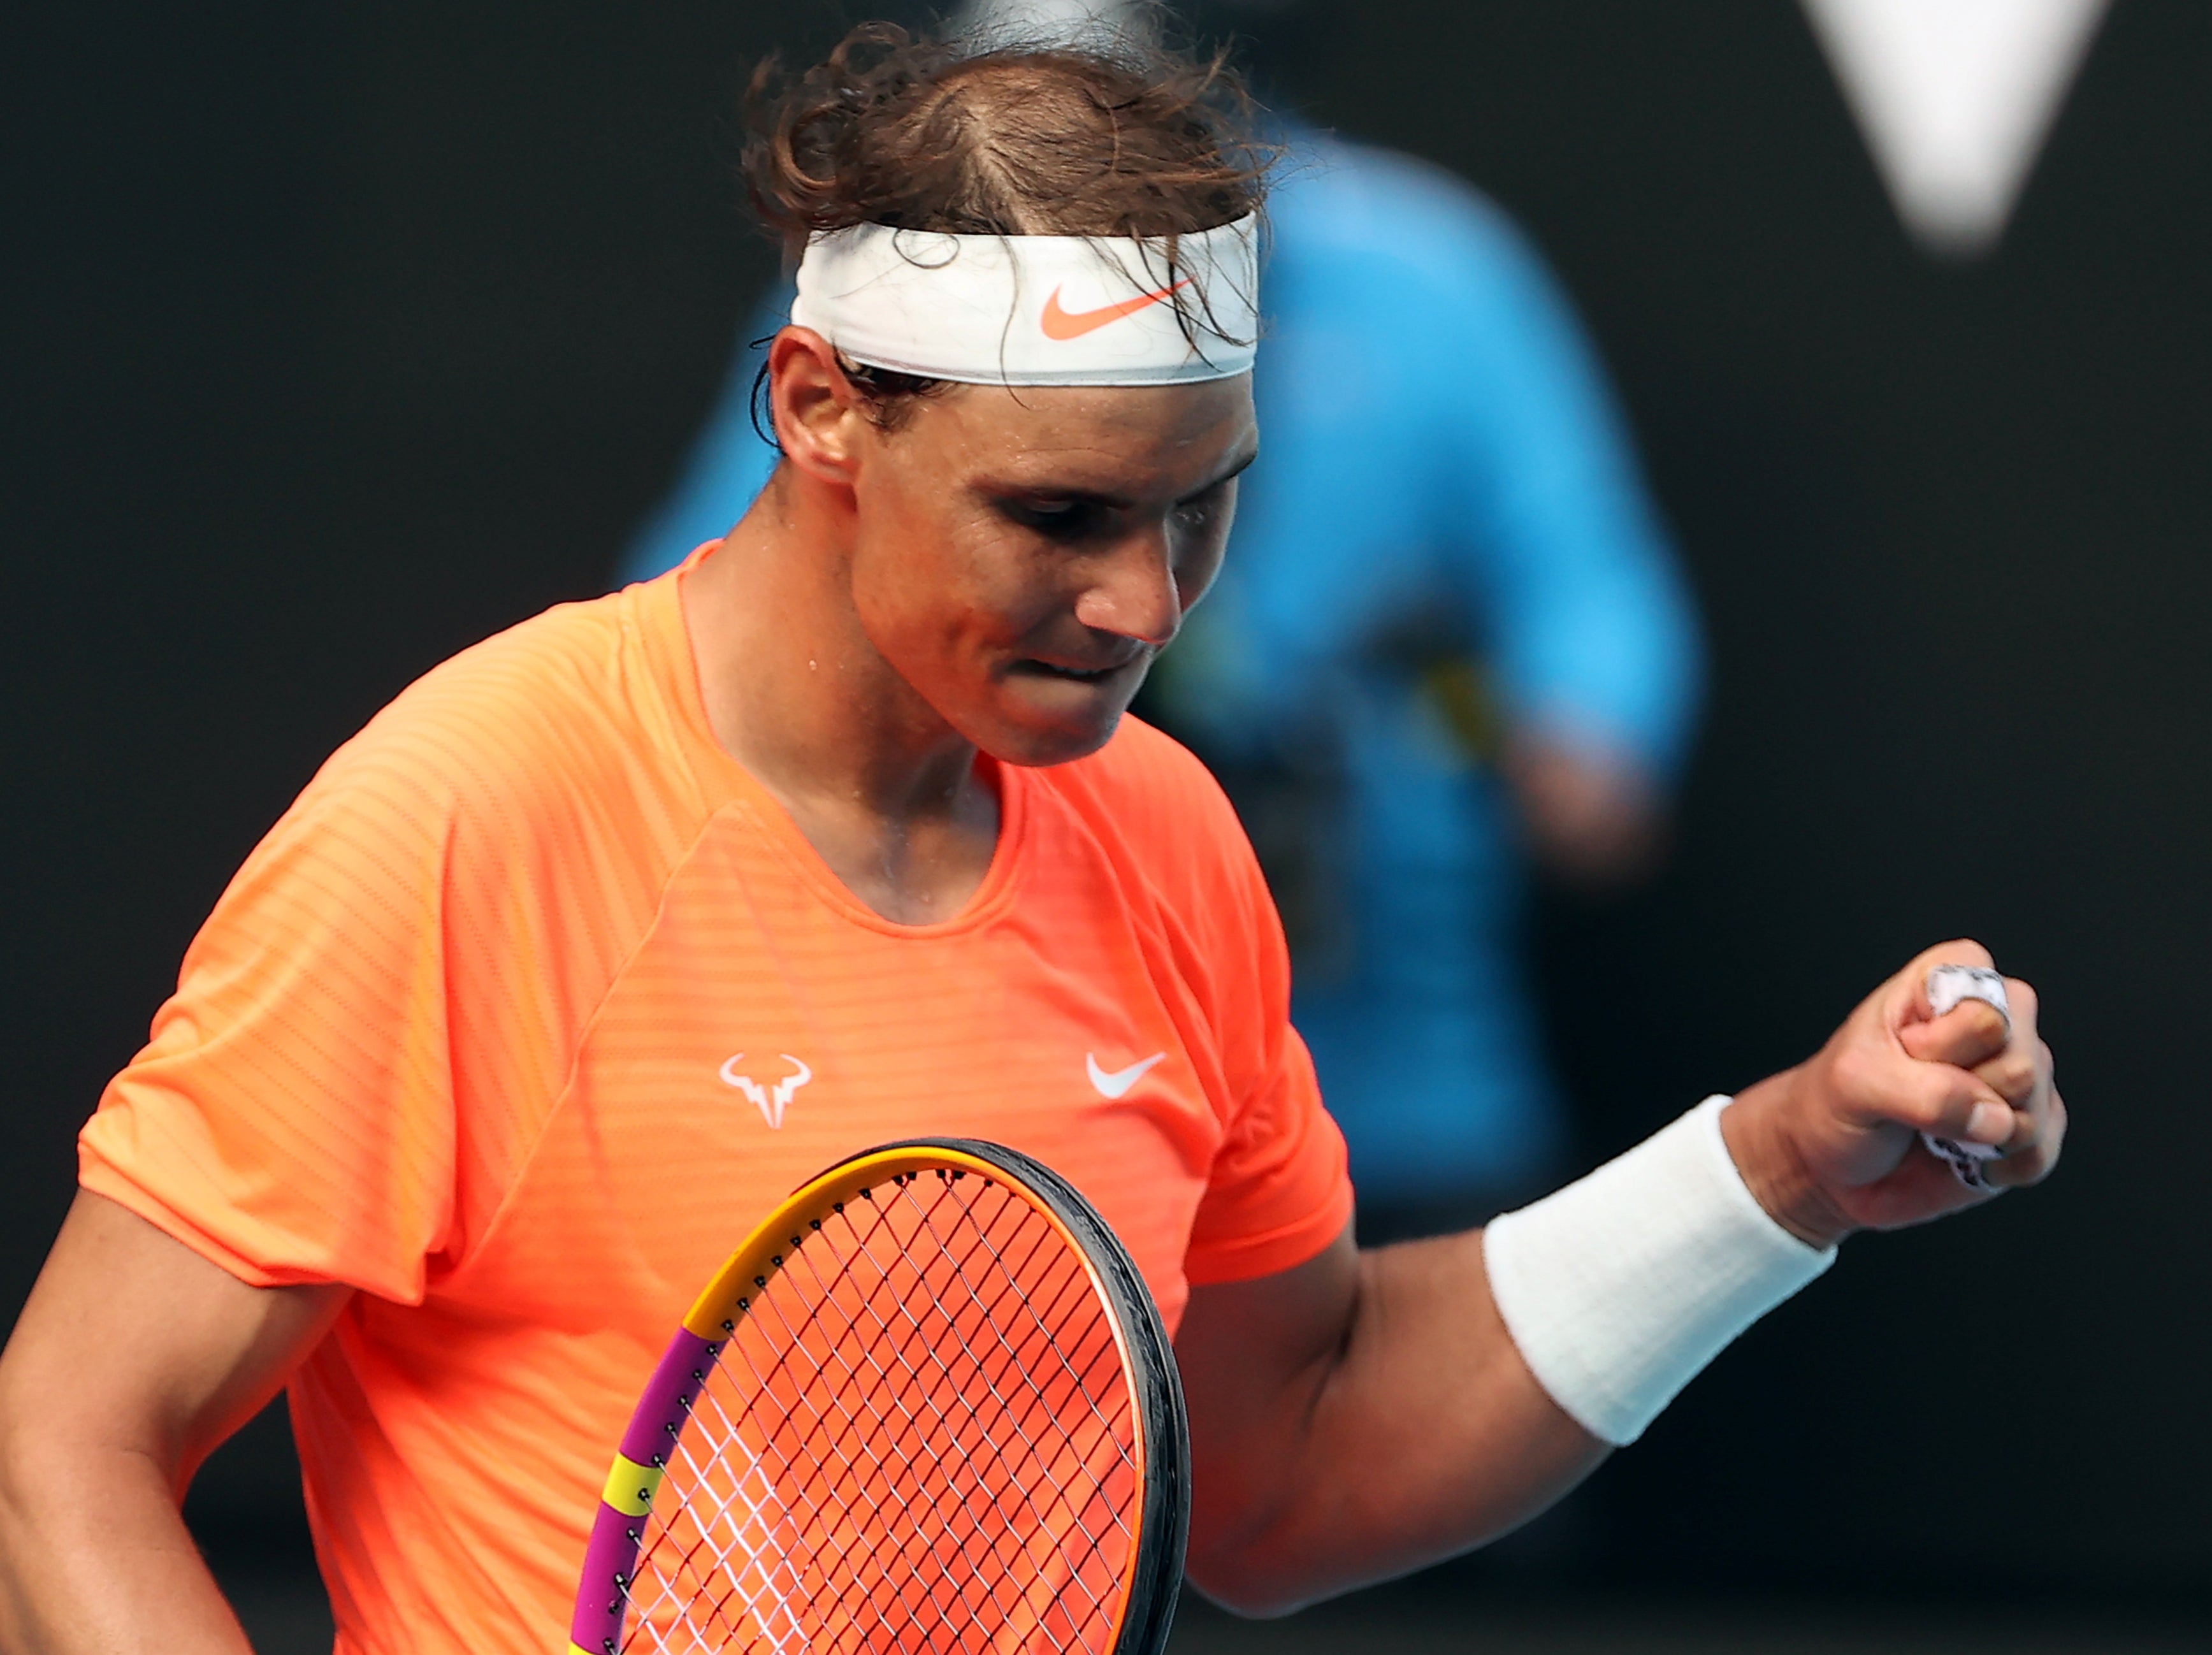 Australian Open 2021: Rafael Nadal sees off Fabio Fognini for spot